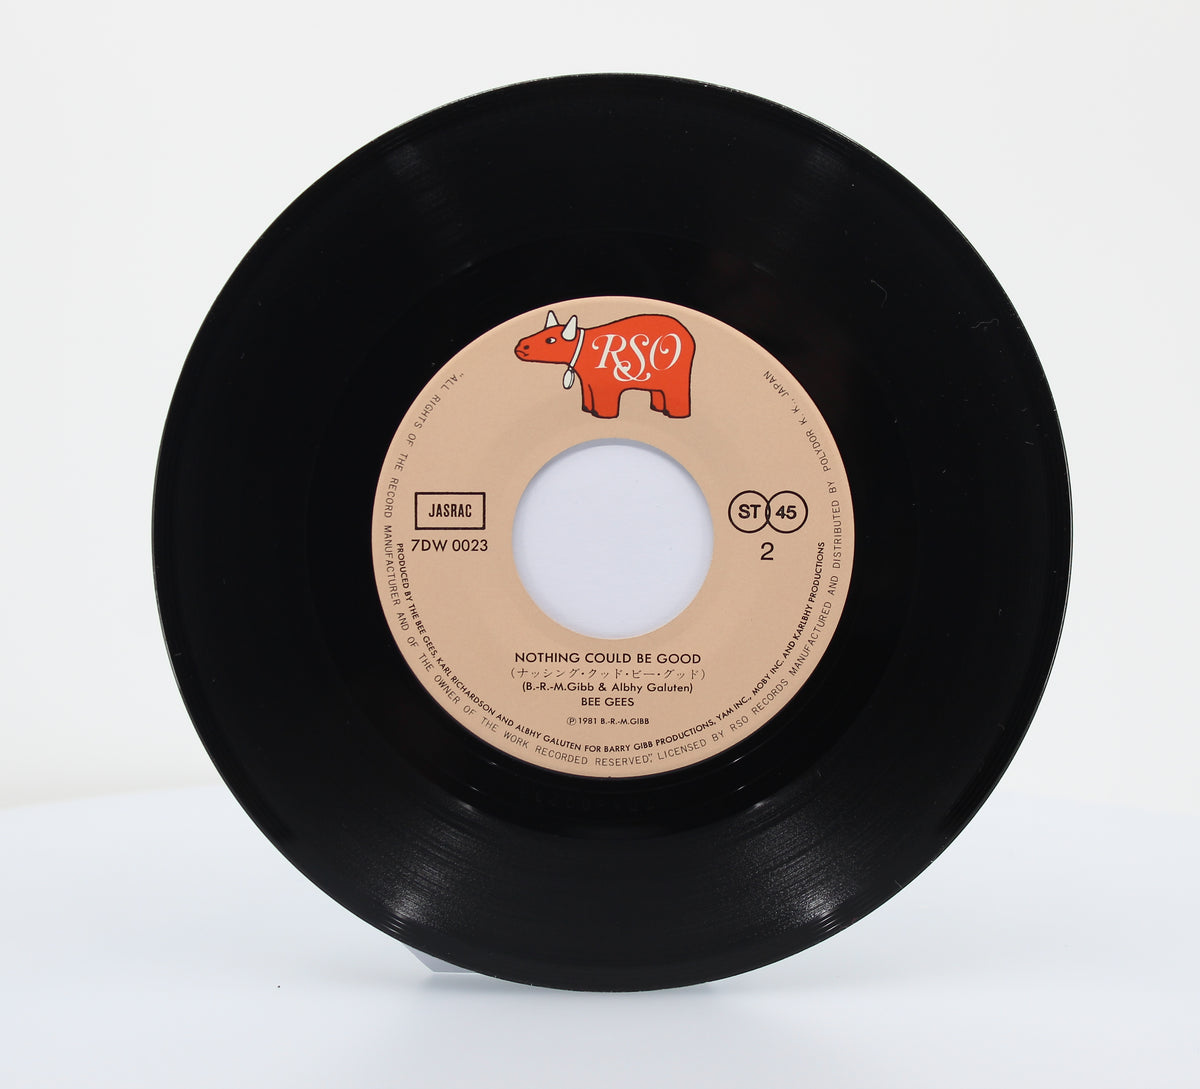 Bee Gees - Paradise, Vinyl single 45rpm, Japan 1982